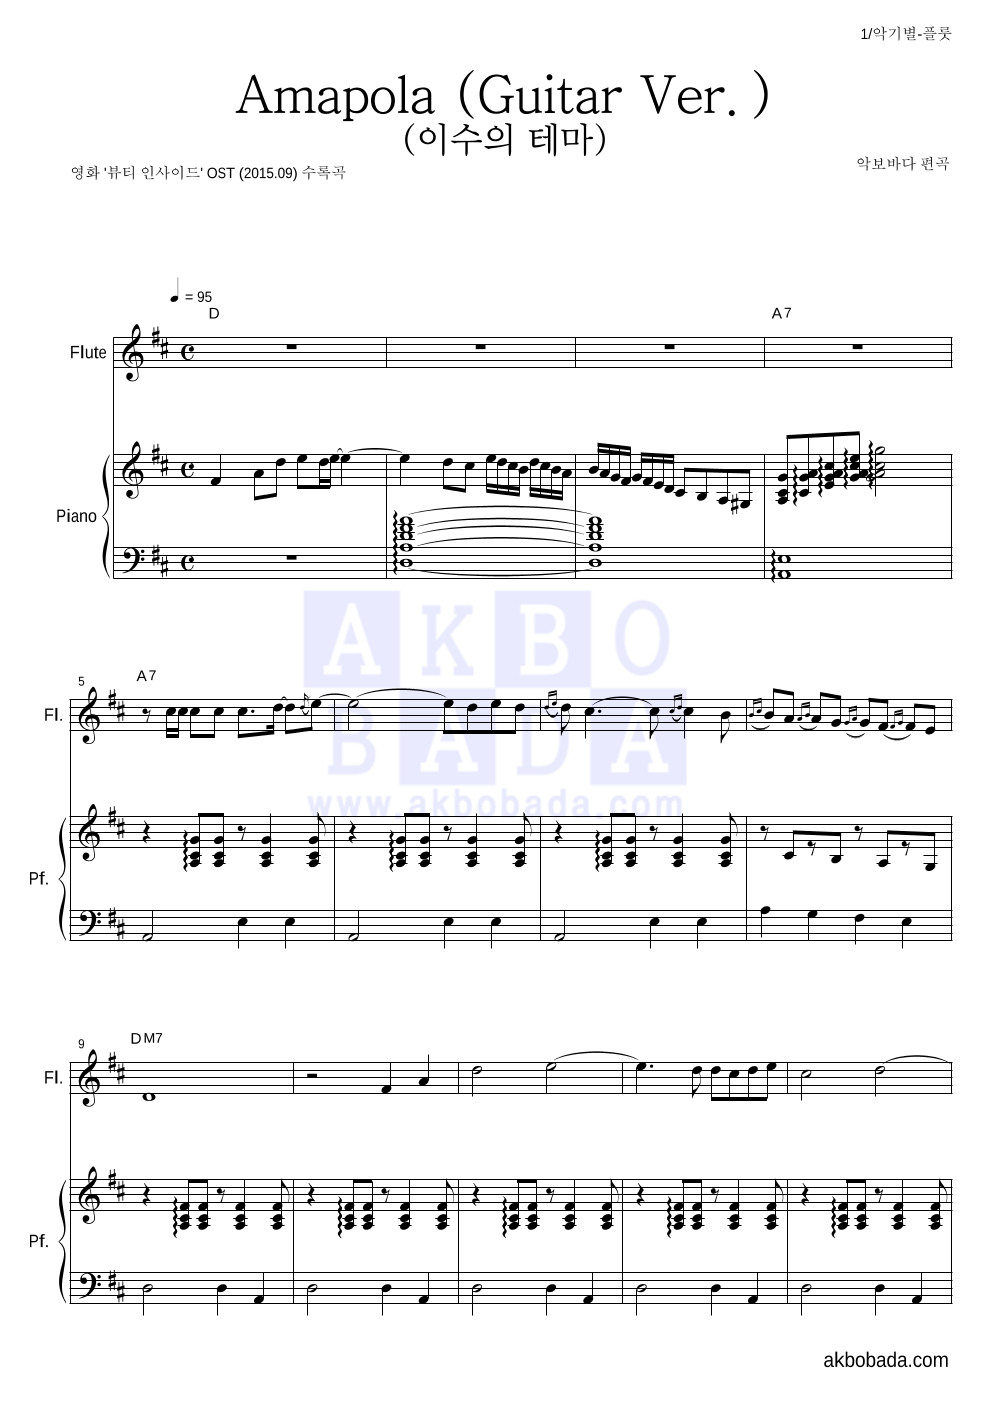 The Soundtrack Kings - Amapola (Guitar Ver.) (이수의 테마) 플룻&피아노 악보 